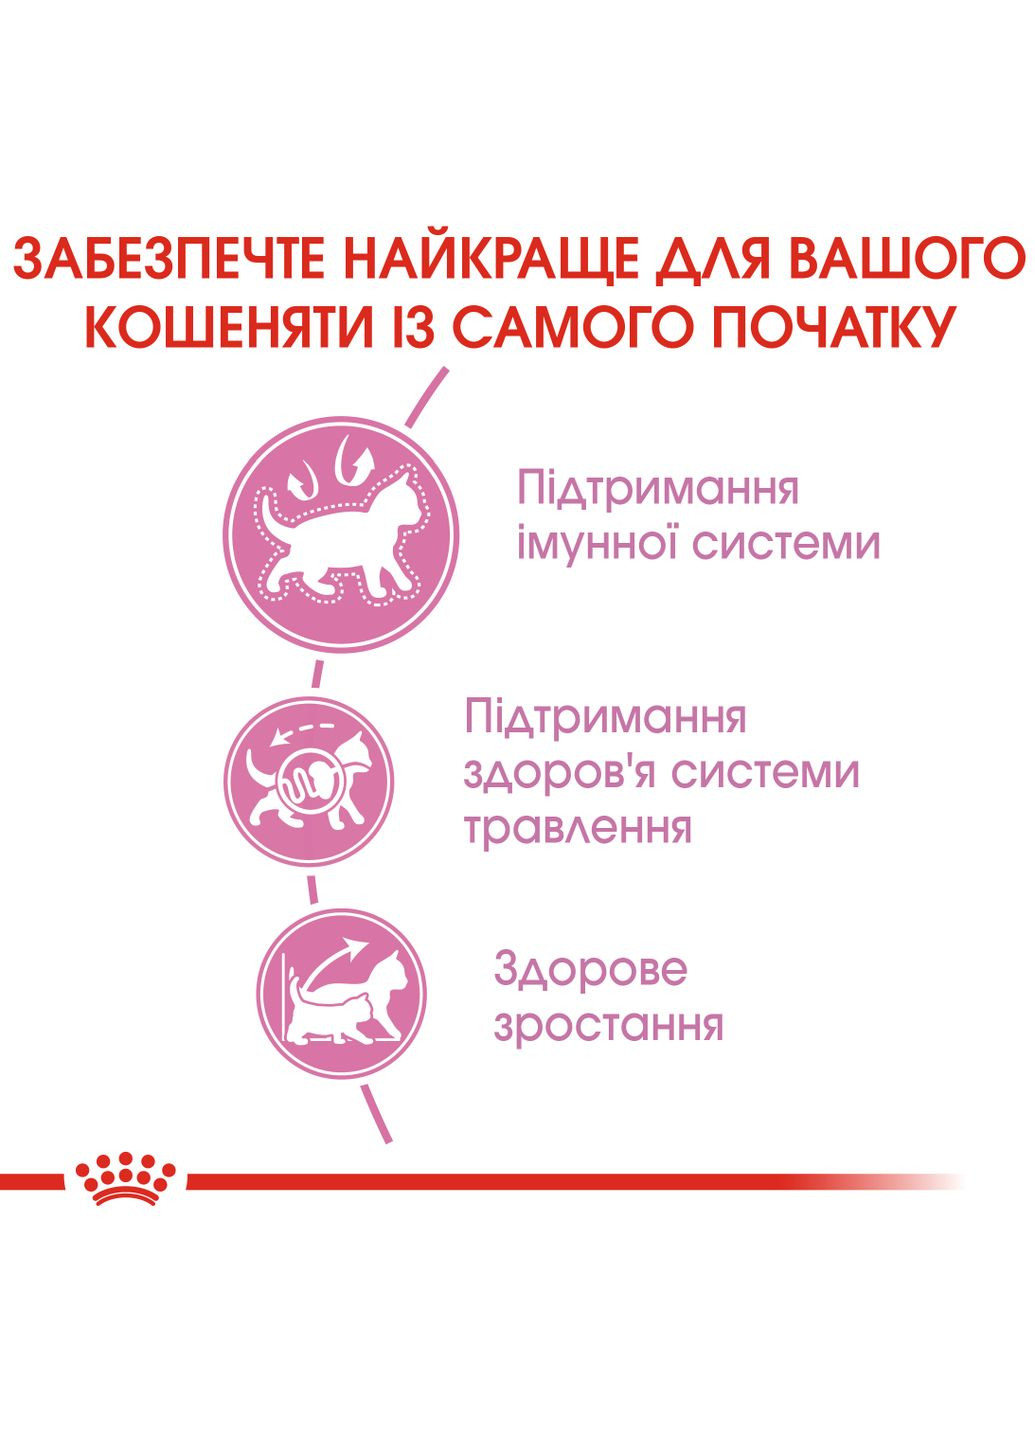 Сухий корм для кошенят Kitten 2 кг (3182550702423) (2522020) Royal Canin (279567136)